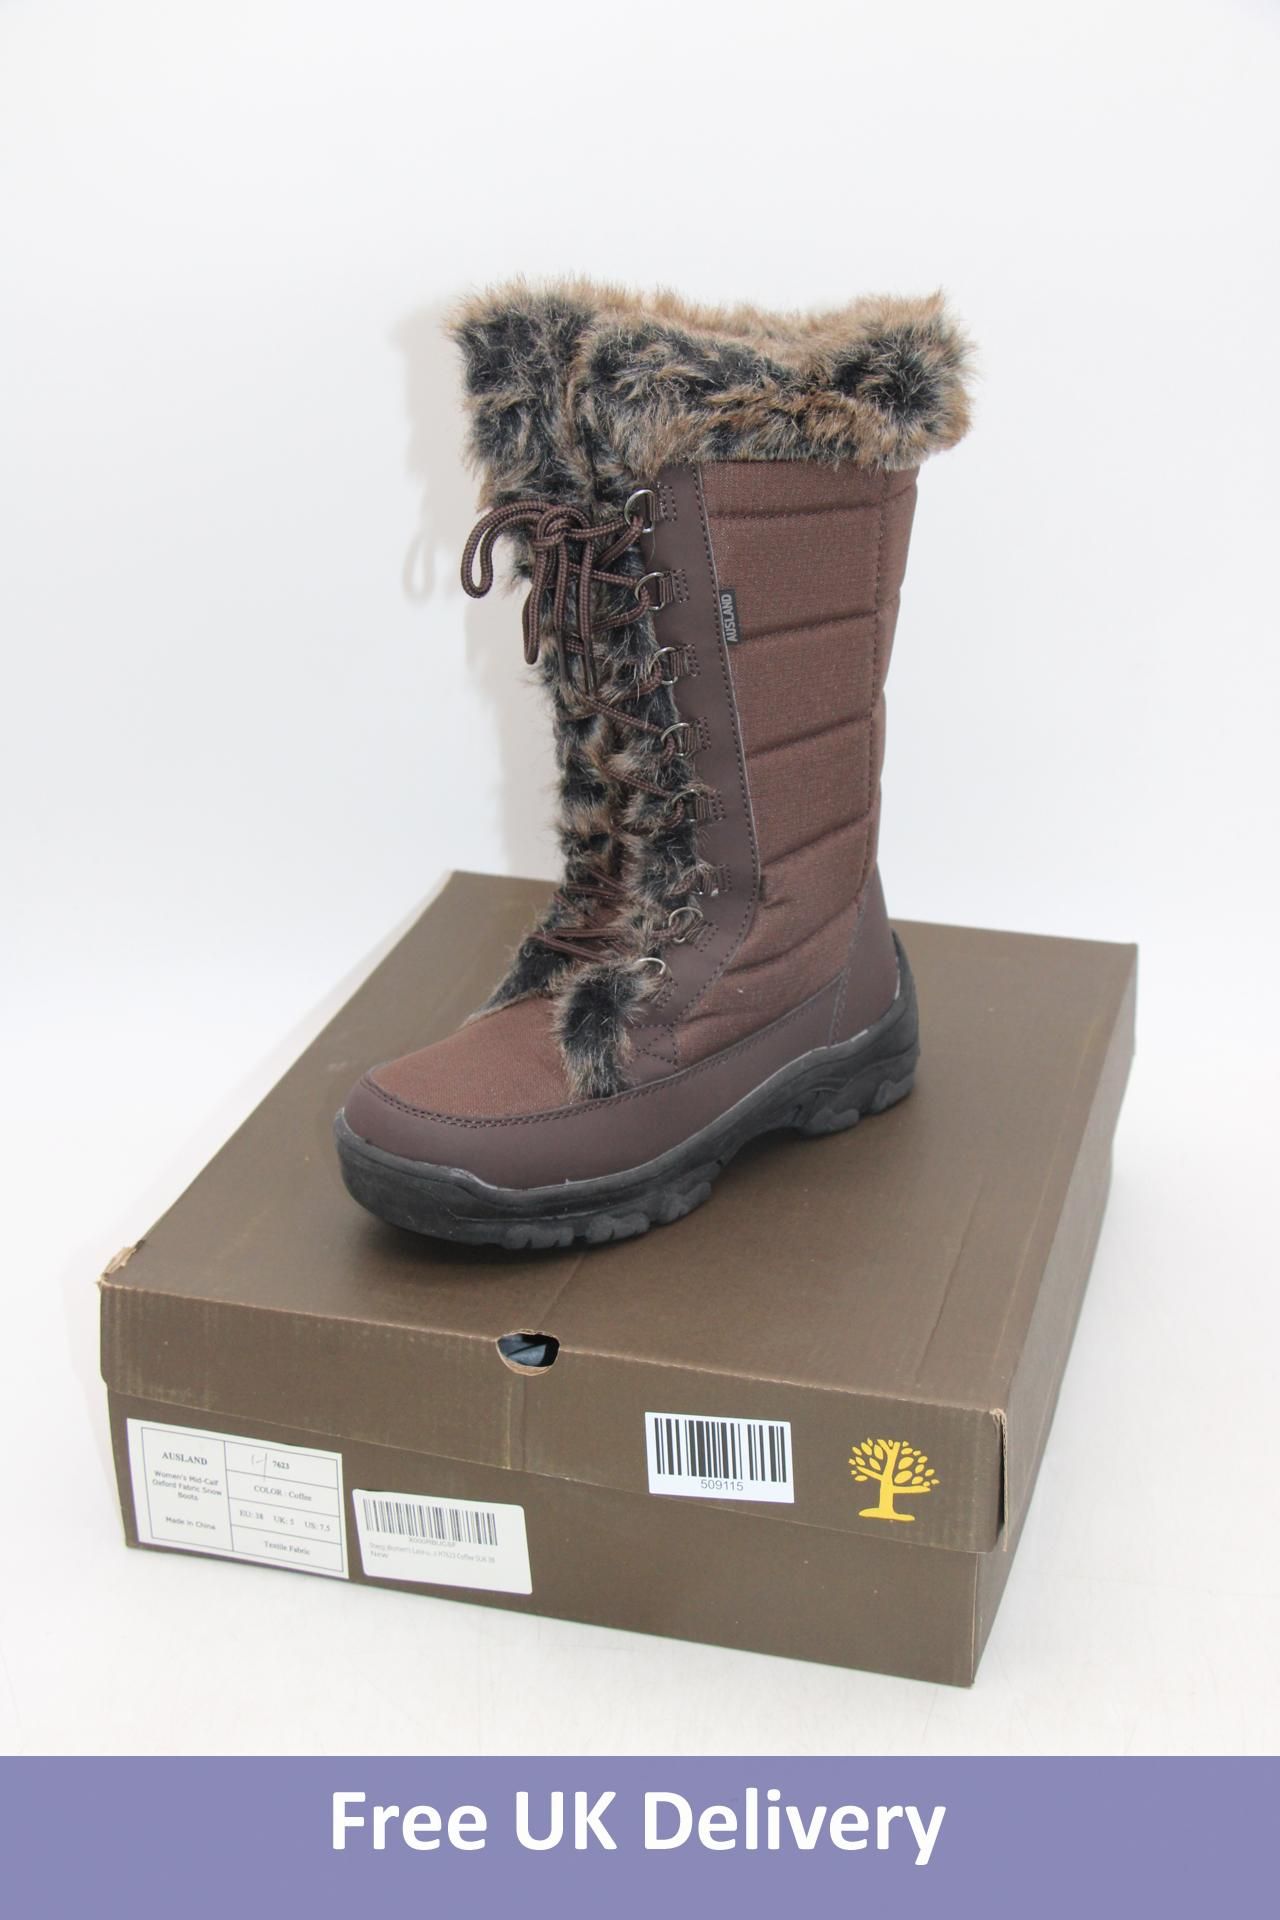 Ausland Woman's Lace Up Midcalf Fabric Snow Boots, Coffee, UK 5. Box damaged